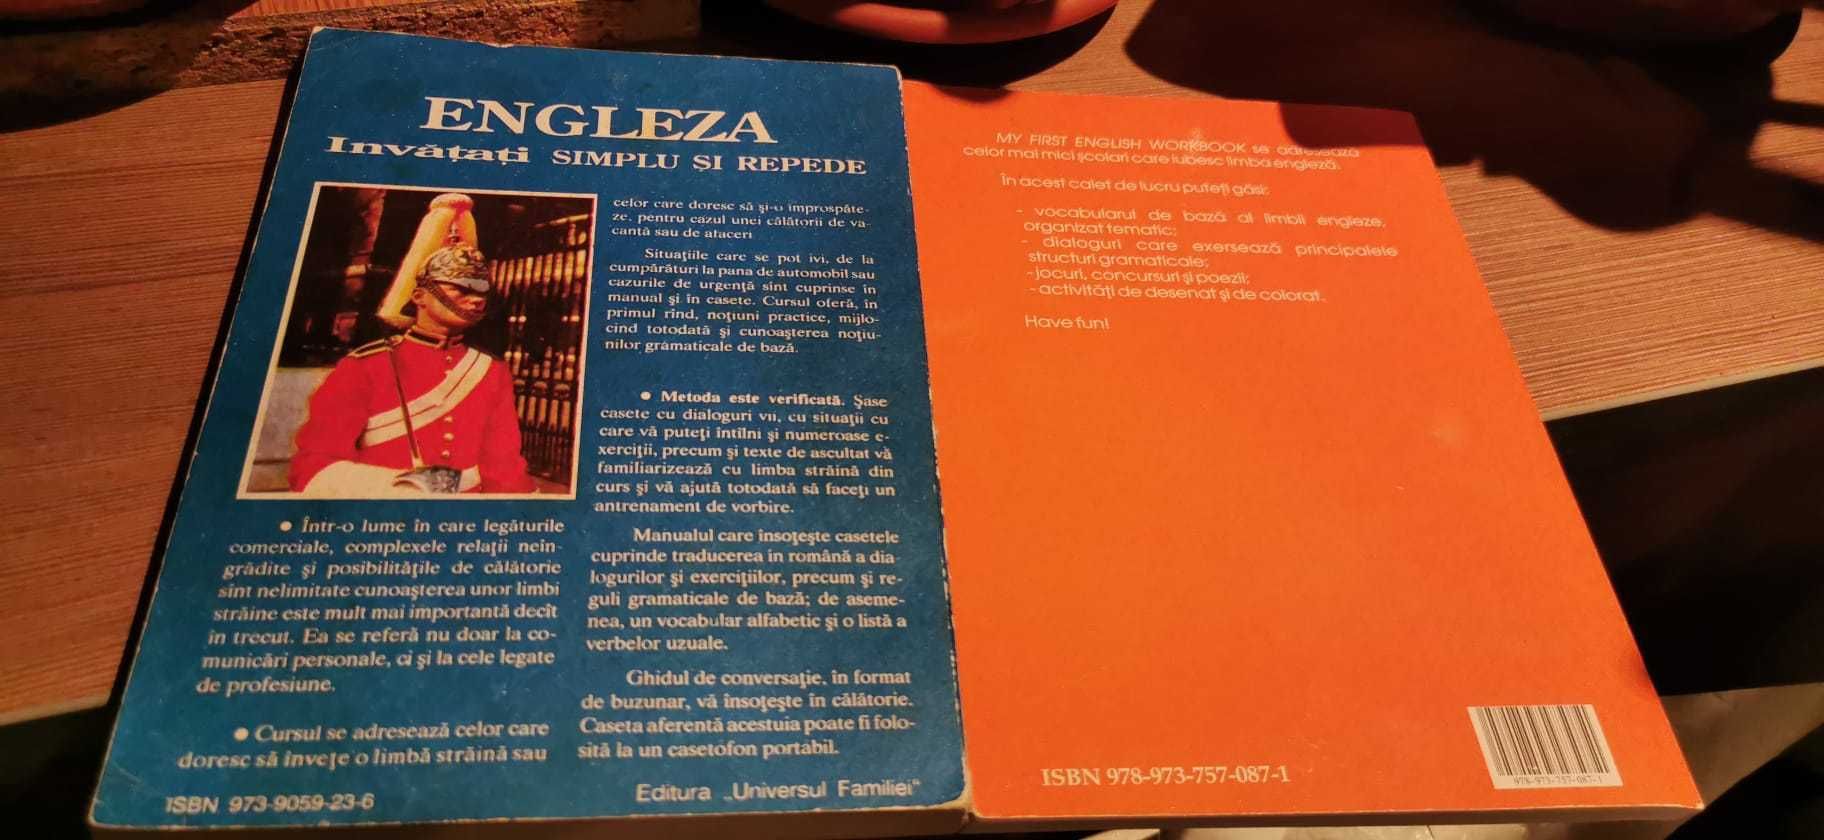 Invatati Engleza/My first English workbook/English for Children